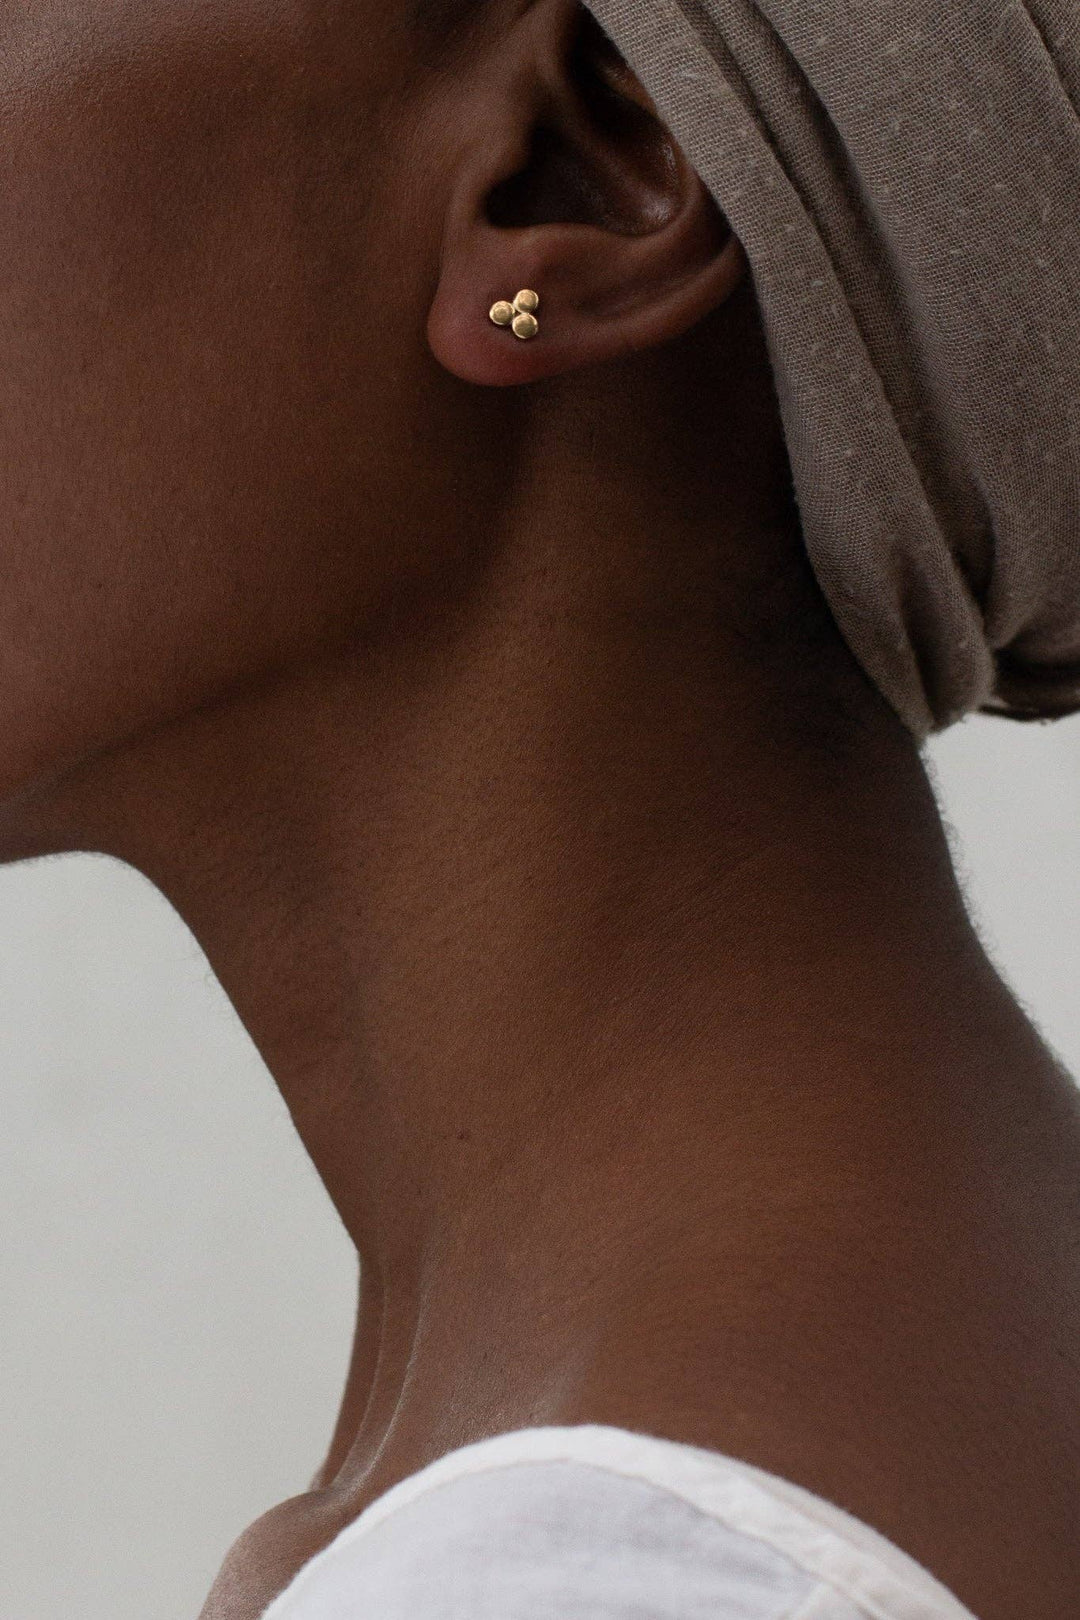 ‘Luwa’ Studs (meaning ‘Flower’ in Tumbuka) three brass dot earrings 